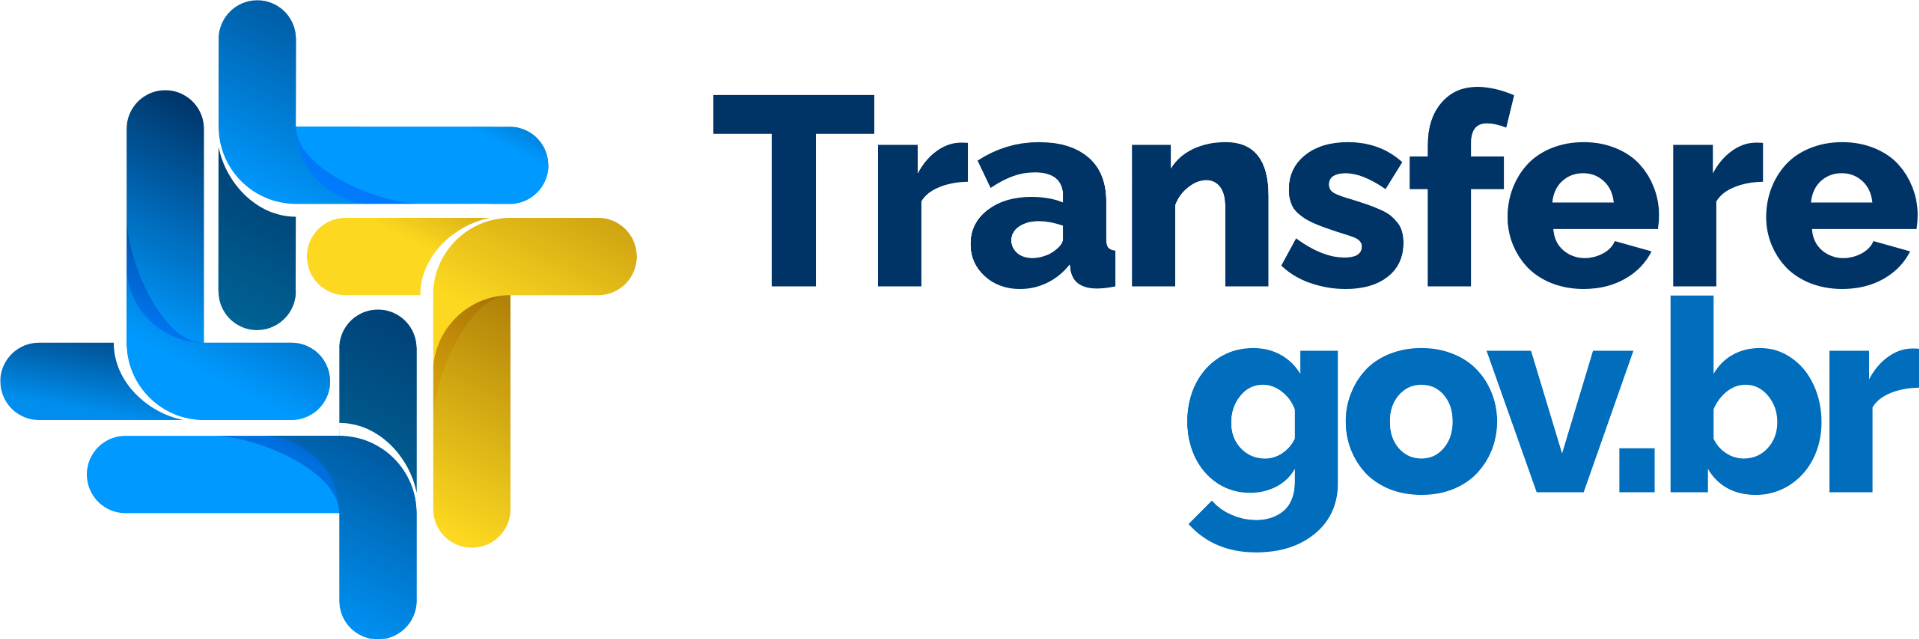 Logomarca Transferegov.br - horizontal HD.png